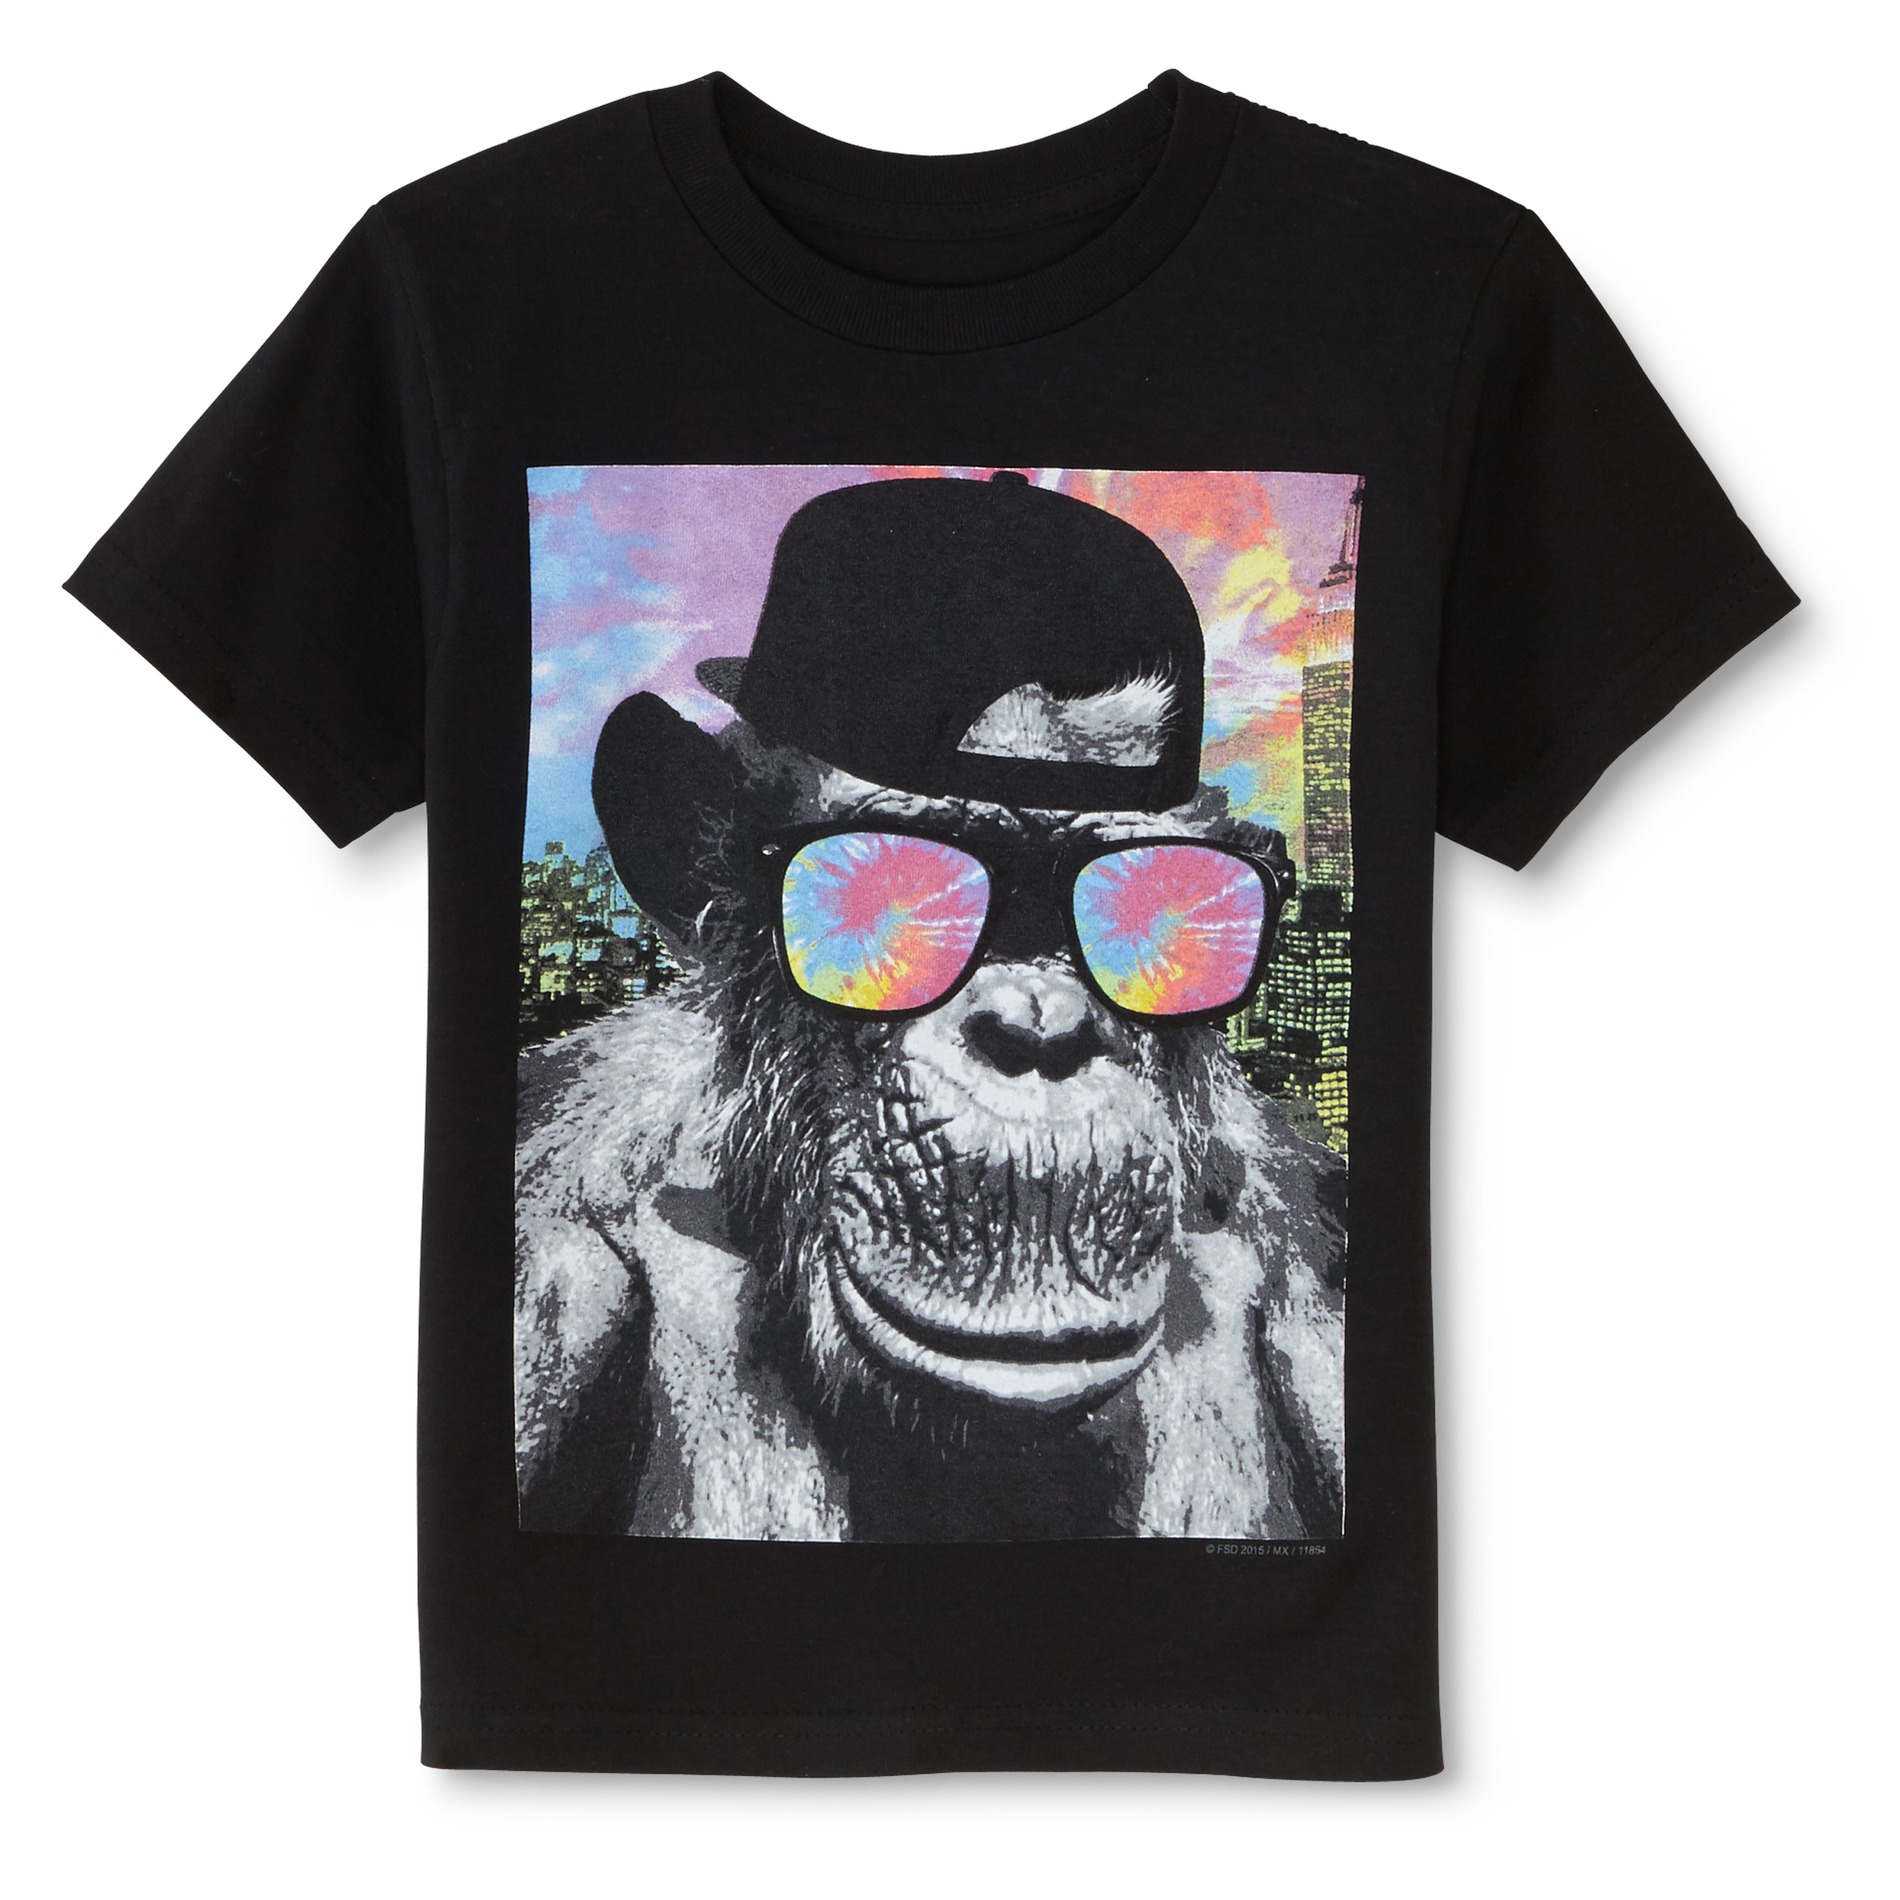 Rudeboyz Boy's Graphic T-Shirt & Foam Dart Launcher - Monkey